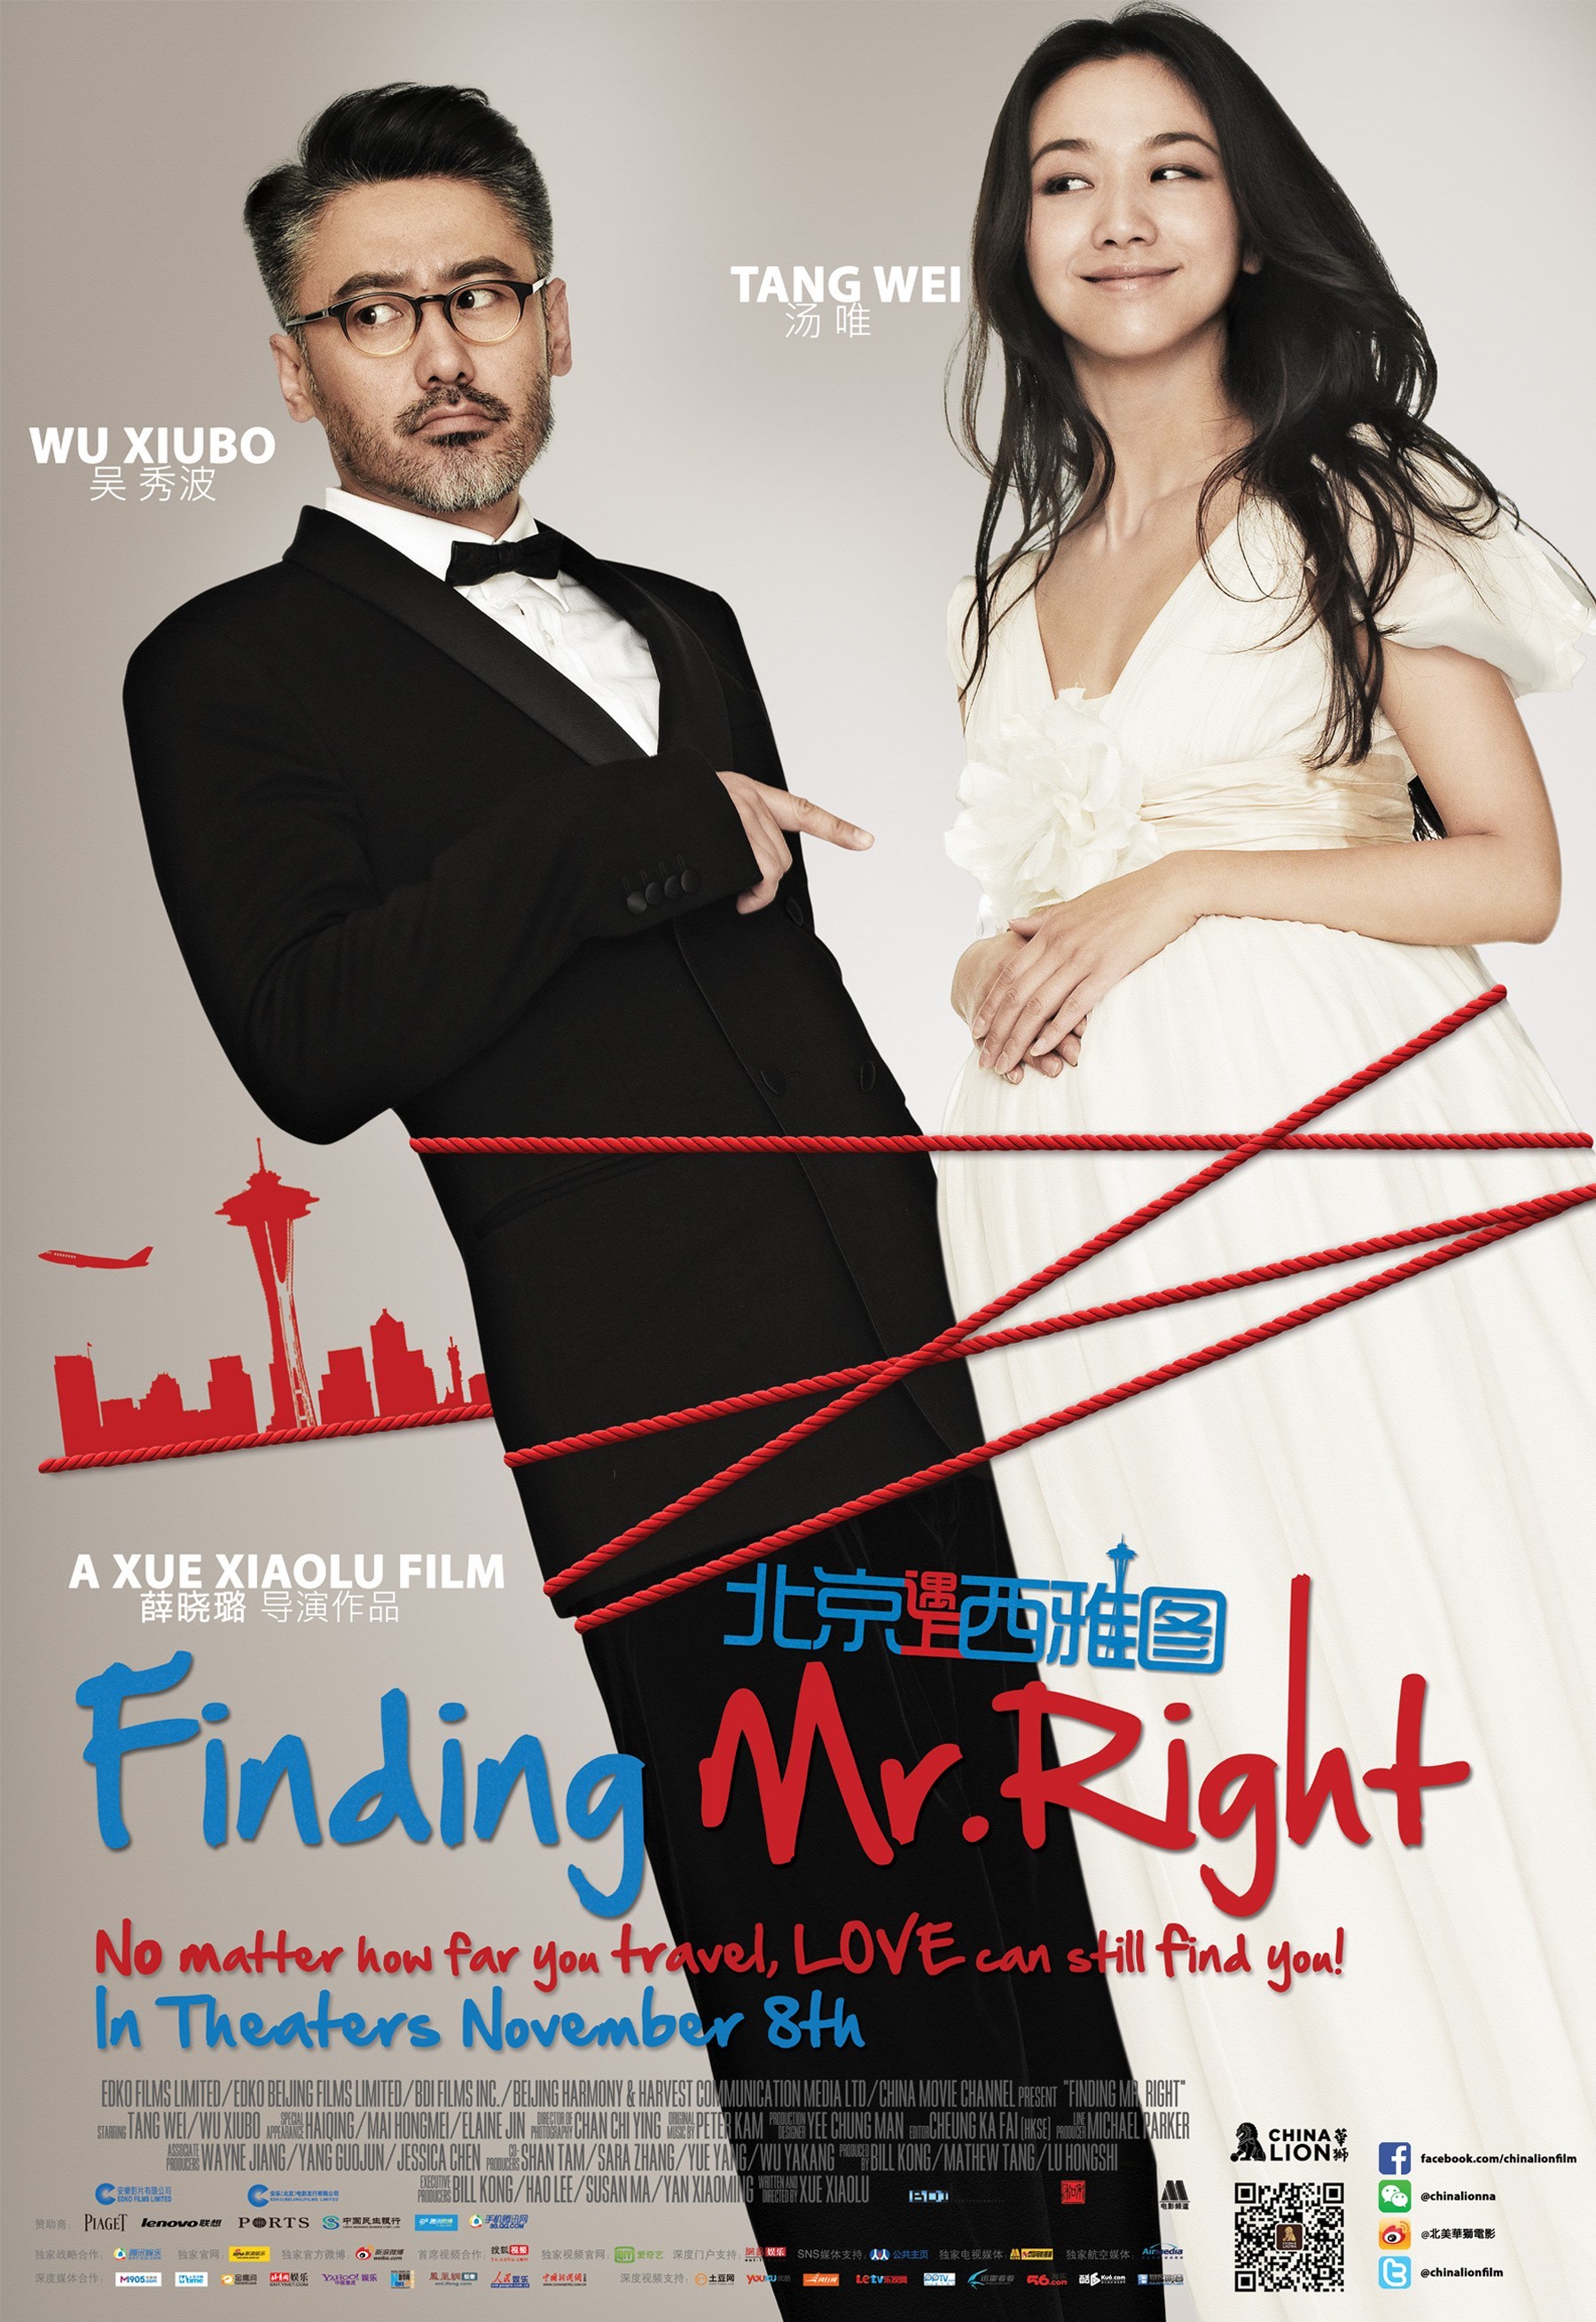 Finding Mr.Right (2013) ข้ามฟ้ามาเติมรัก (Soundtrack ซับไทย) - ดูหนังออนไลน